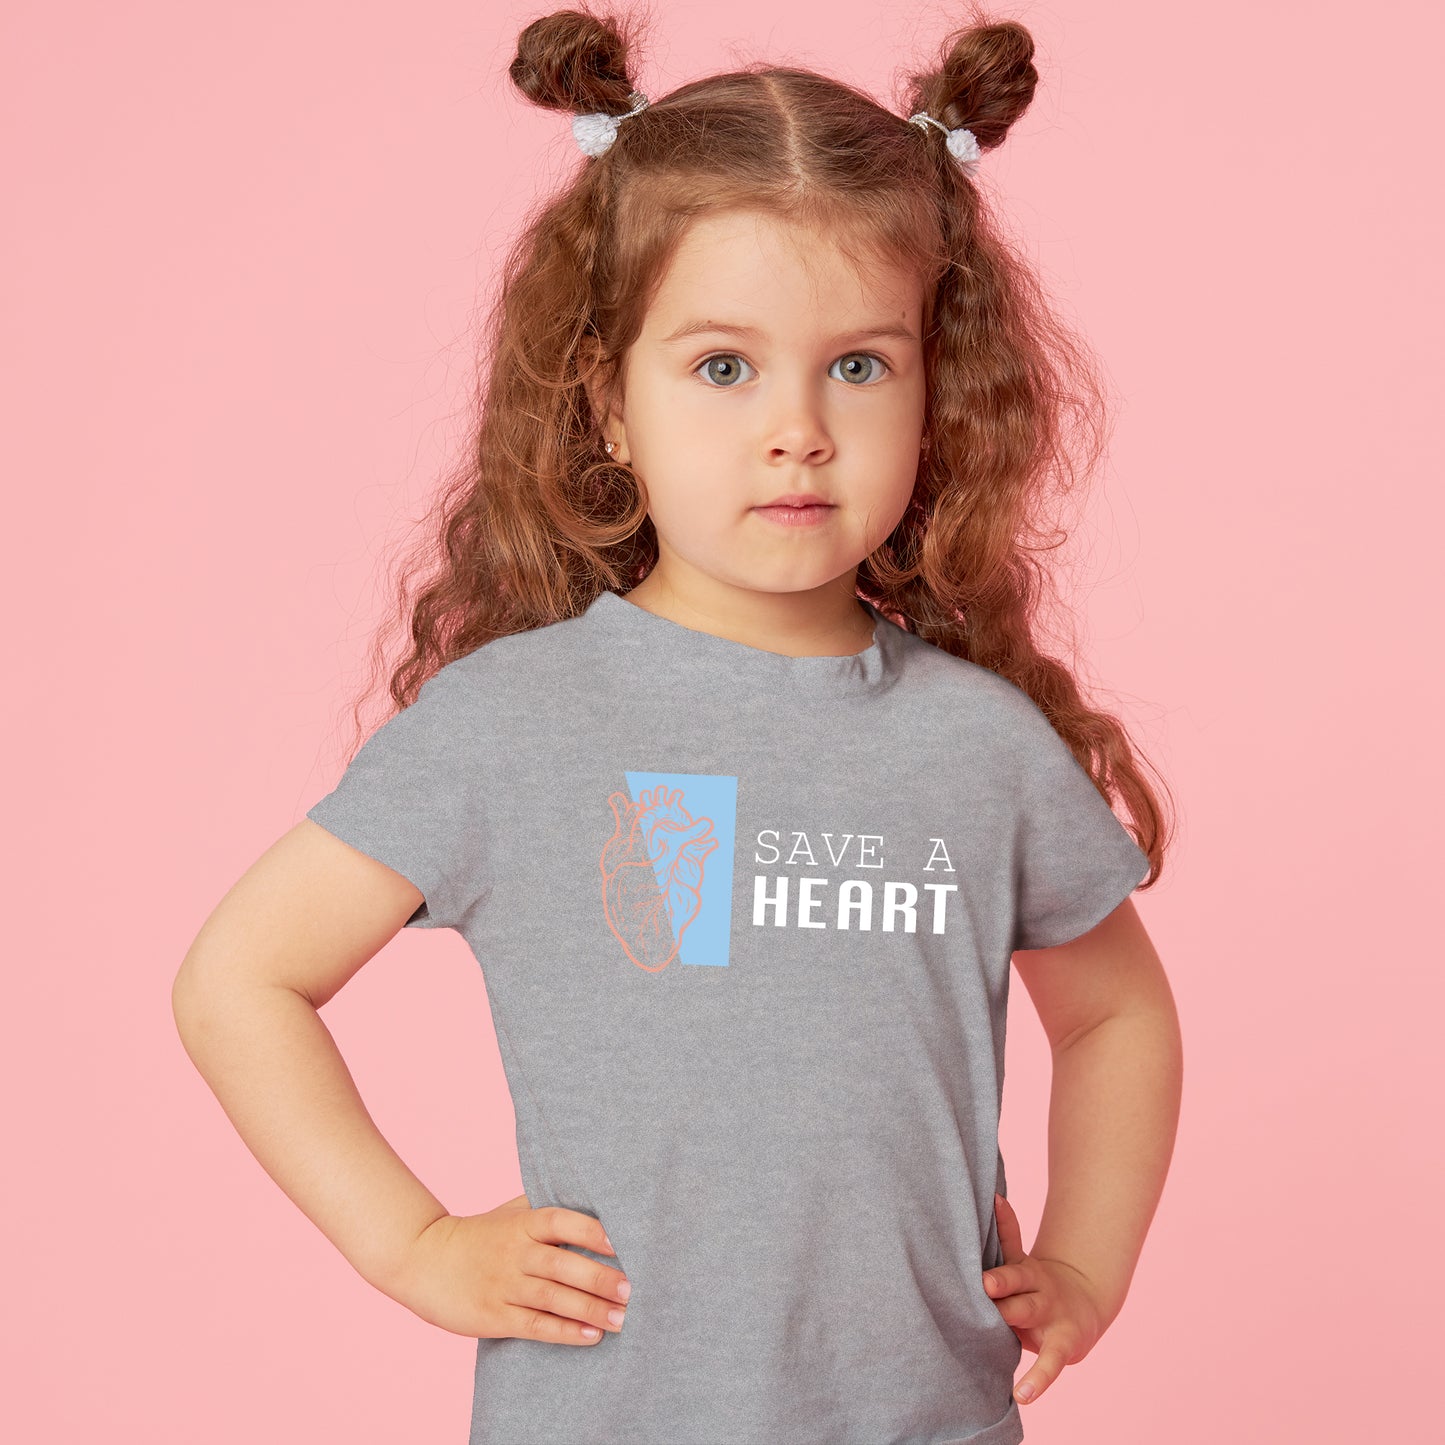 2023 Save A Heart Toddler T-Shirt - Grey